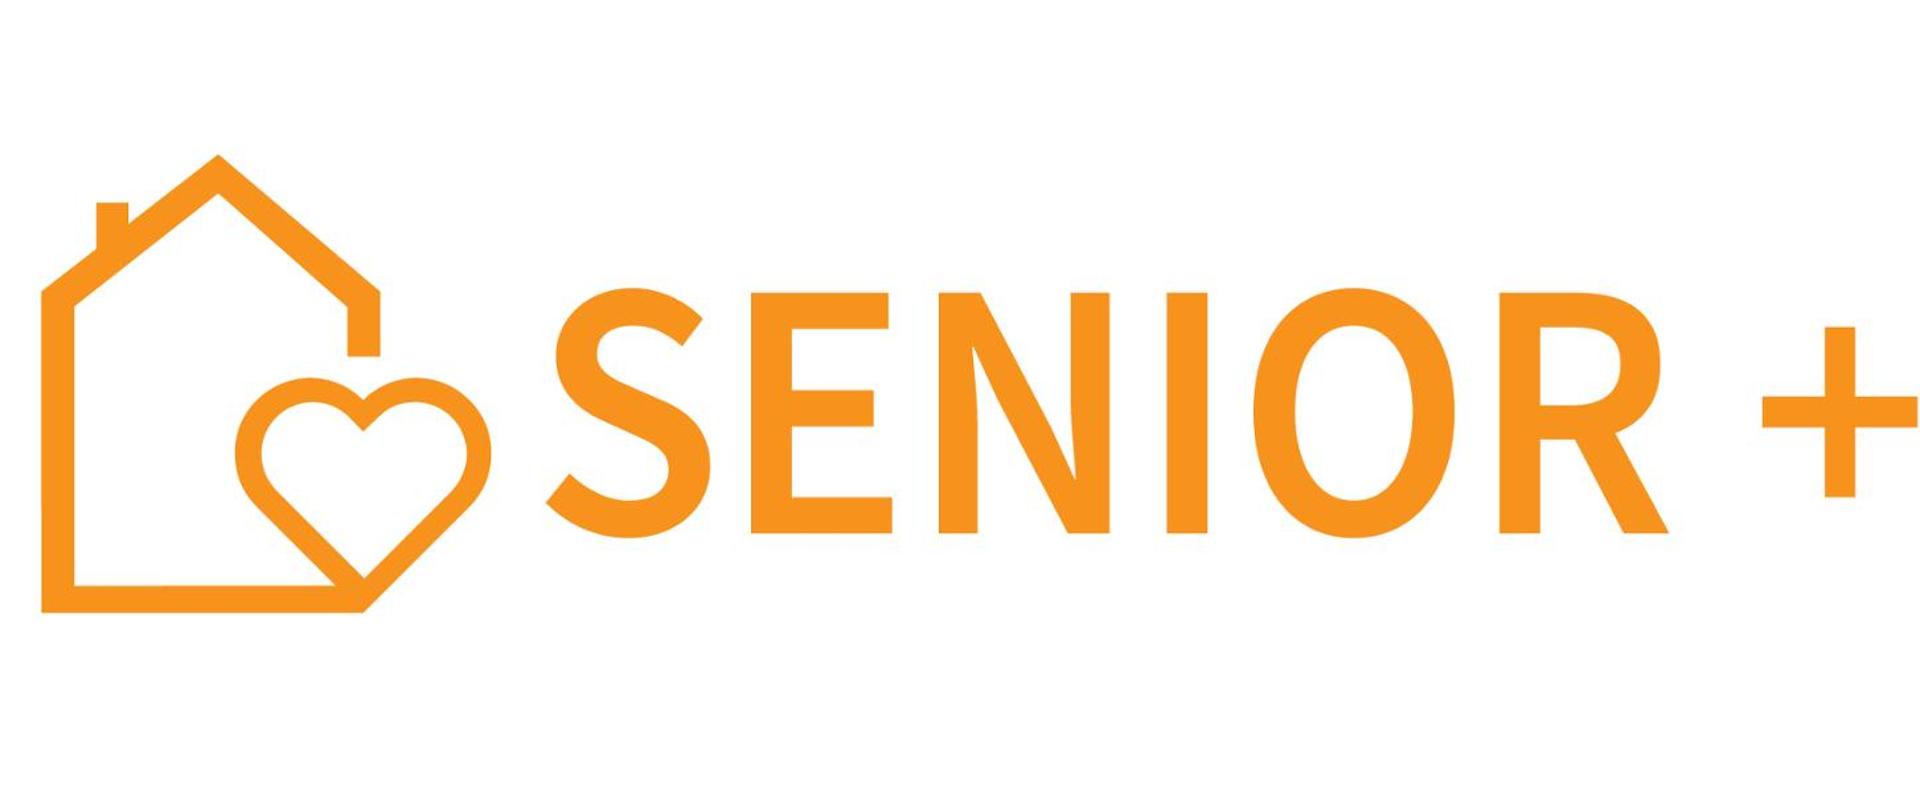 Baner z pomarańczowym napisem Senior +